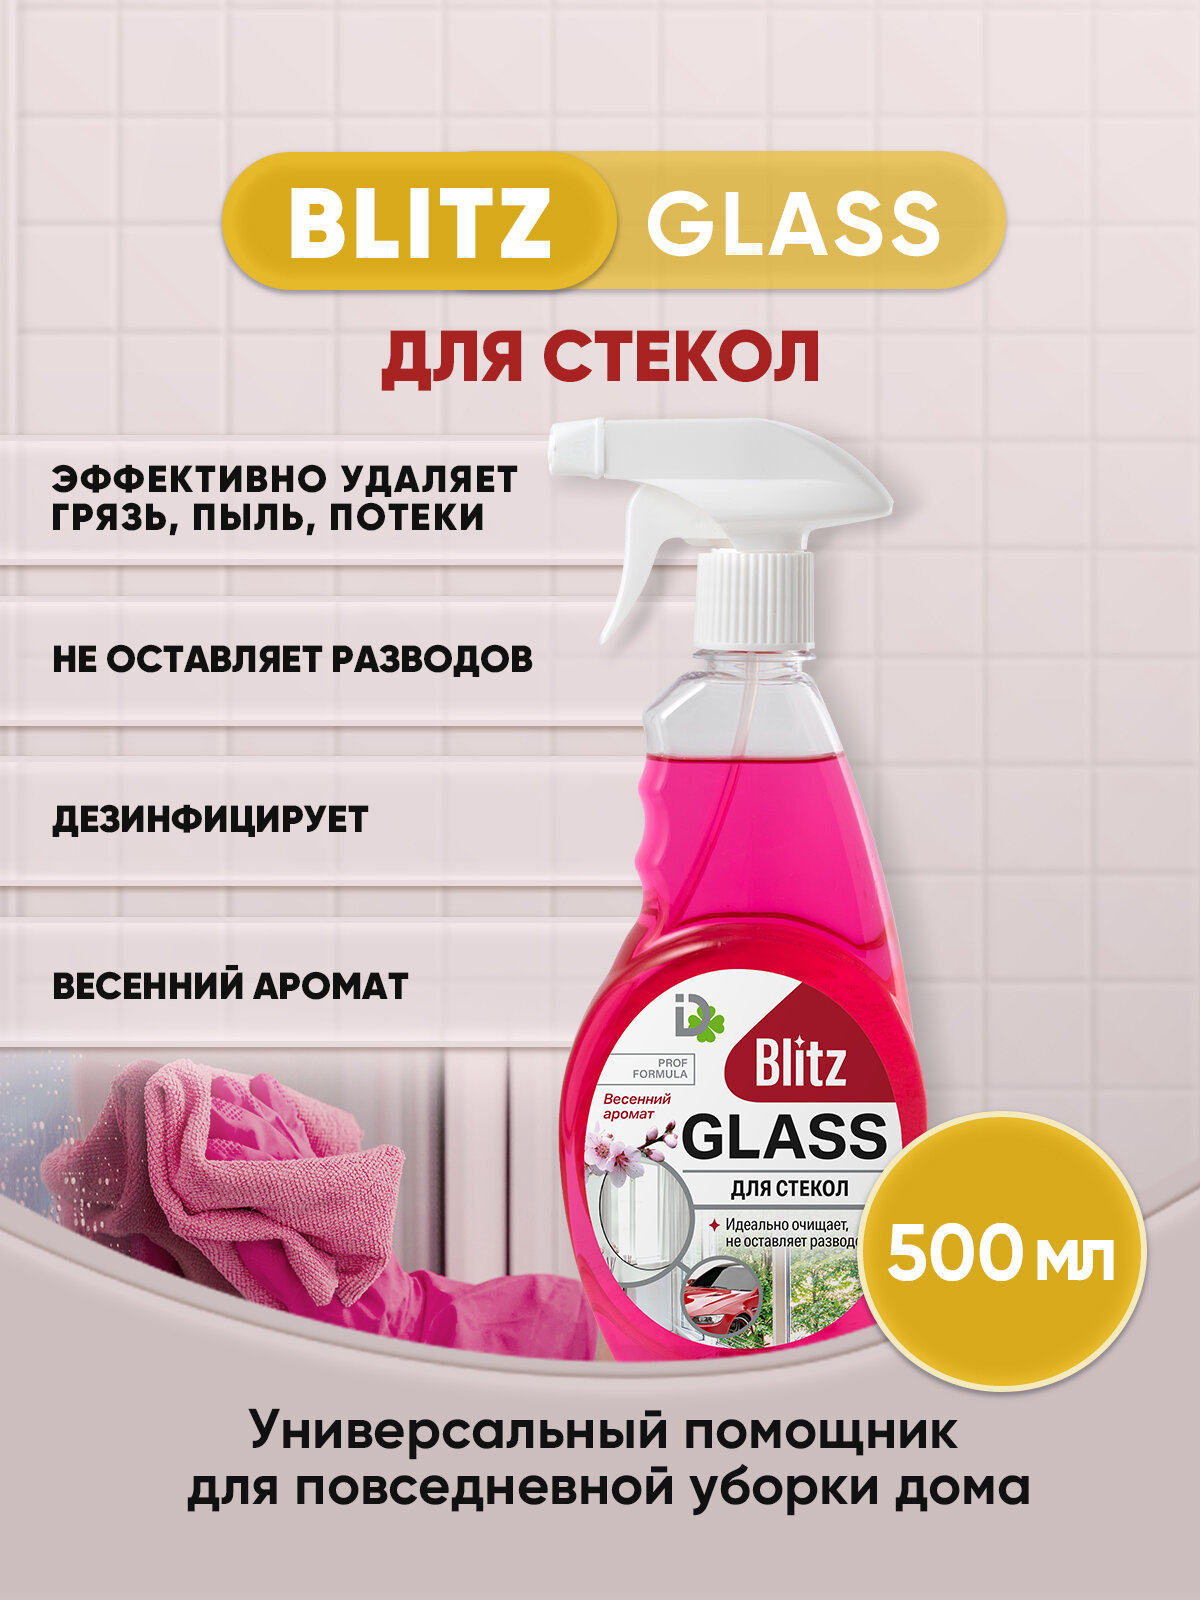 BLITZ GLASS для стекол Весенний аромат 500мл/1шт - фотография № 1